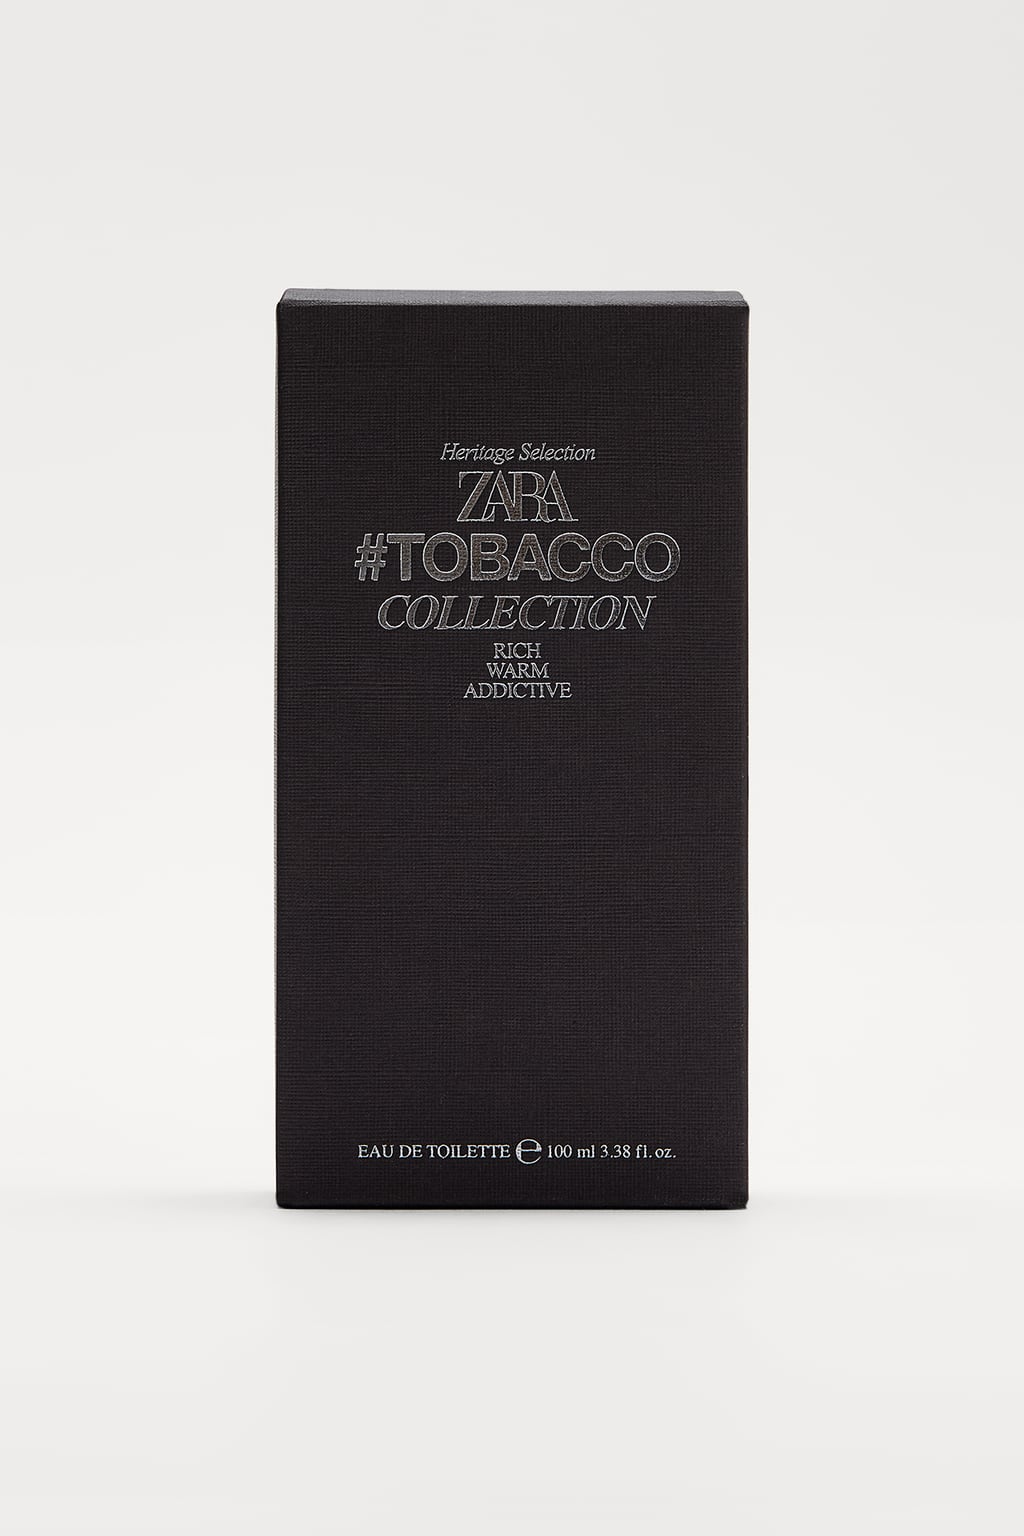  Zara Men's #TOBACCO COLLECTION RICH/WARM/ADDICTIVE